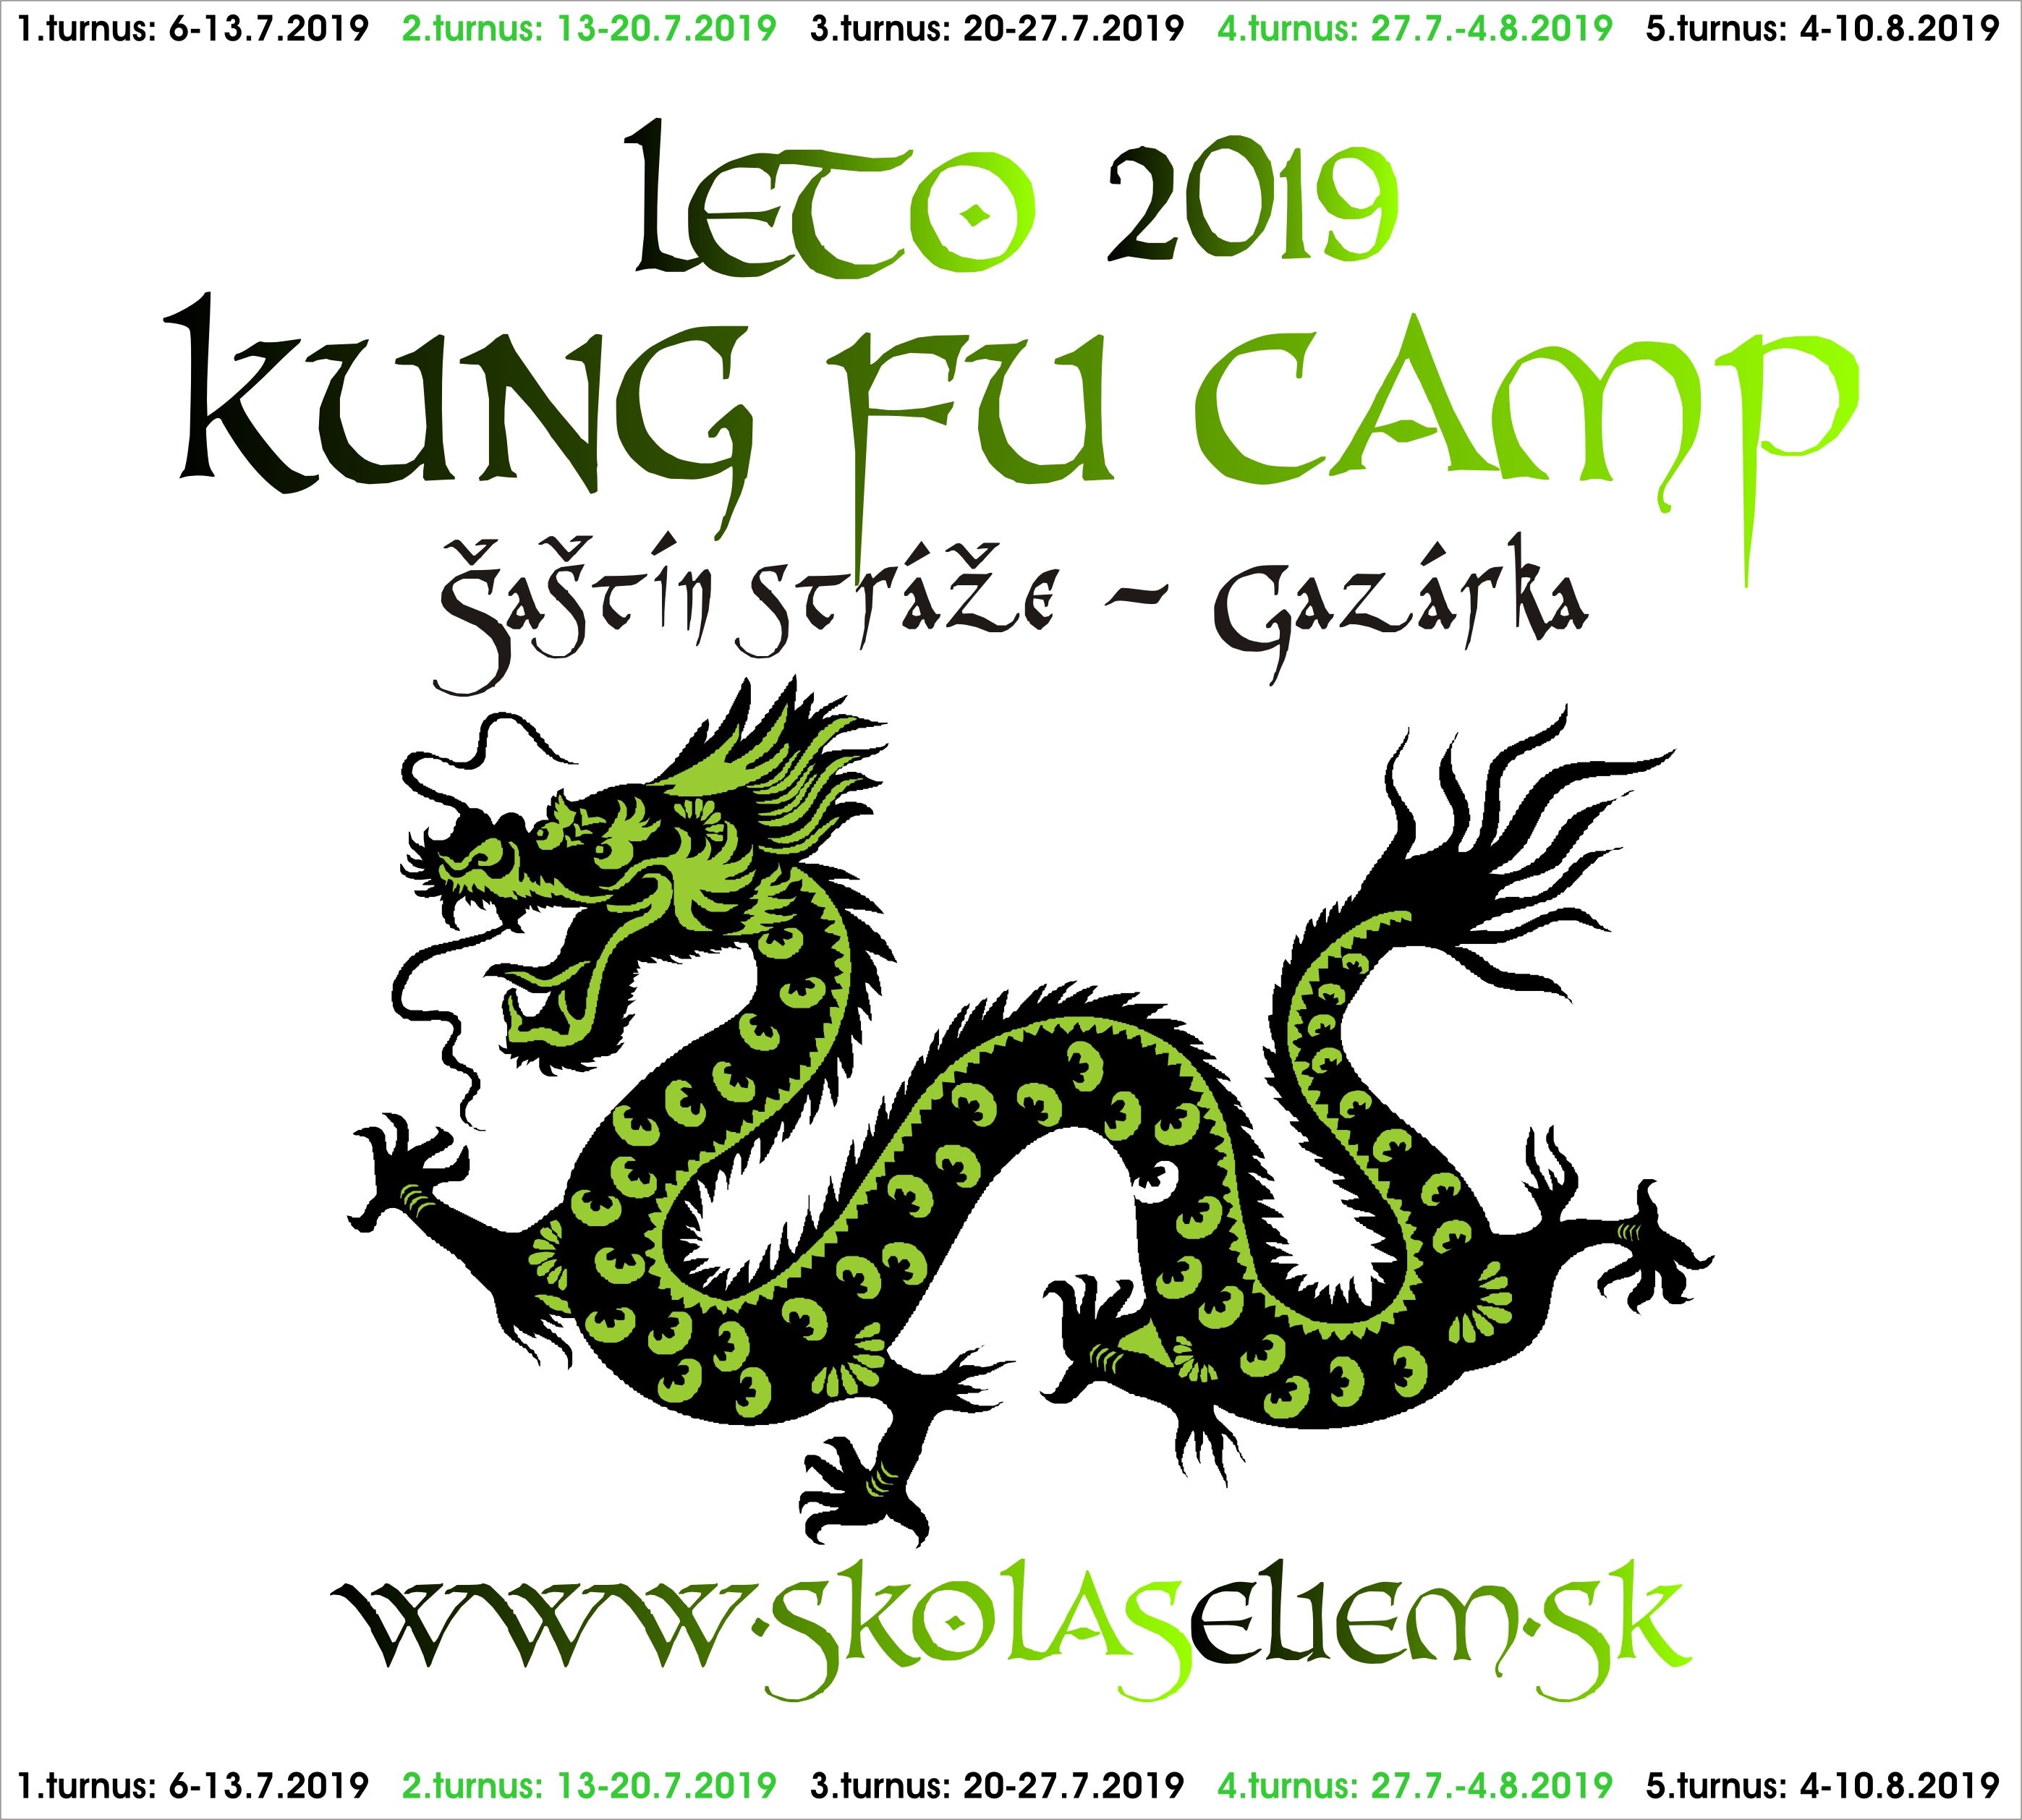 Kung fu camp 2019